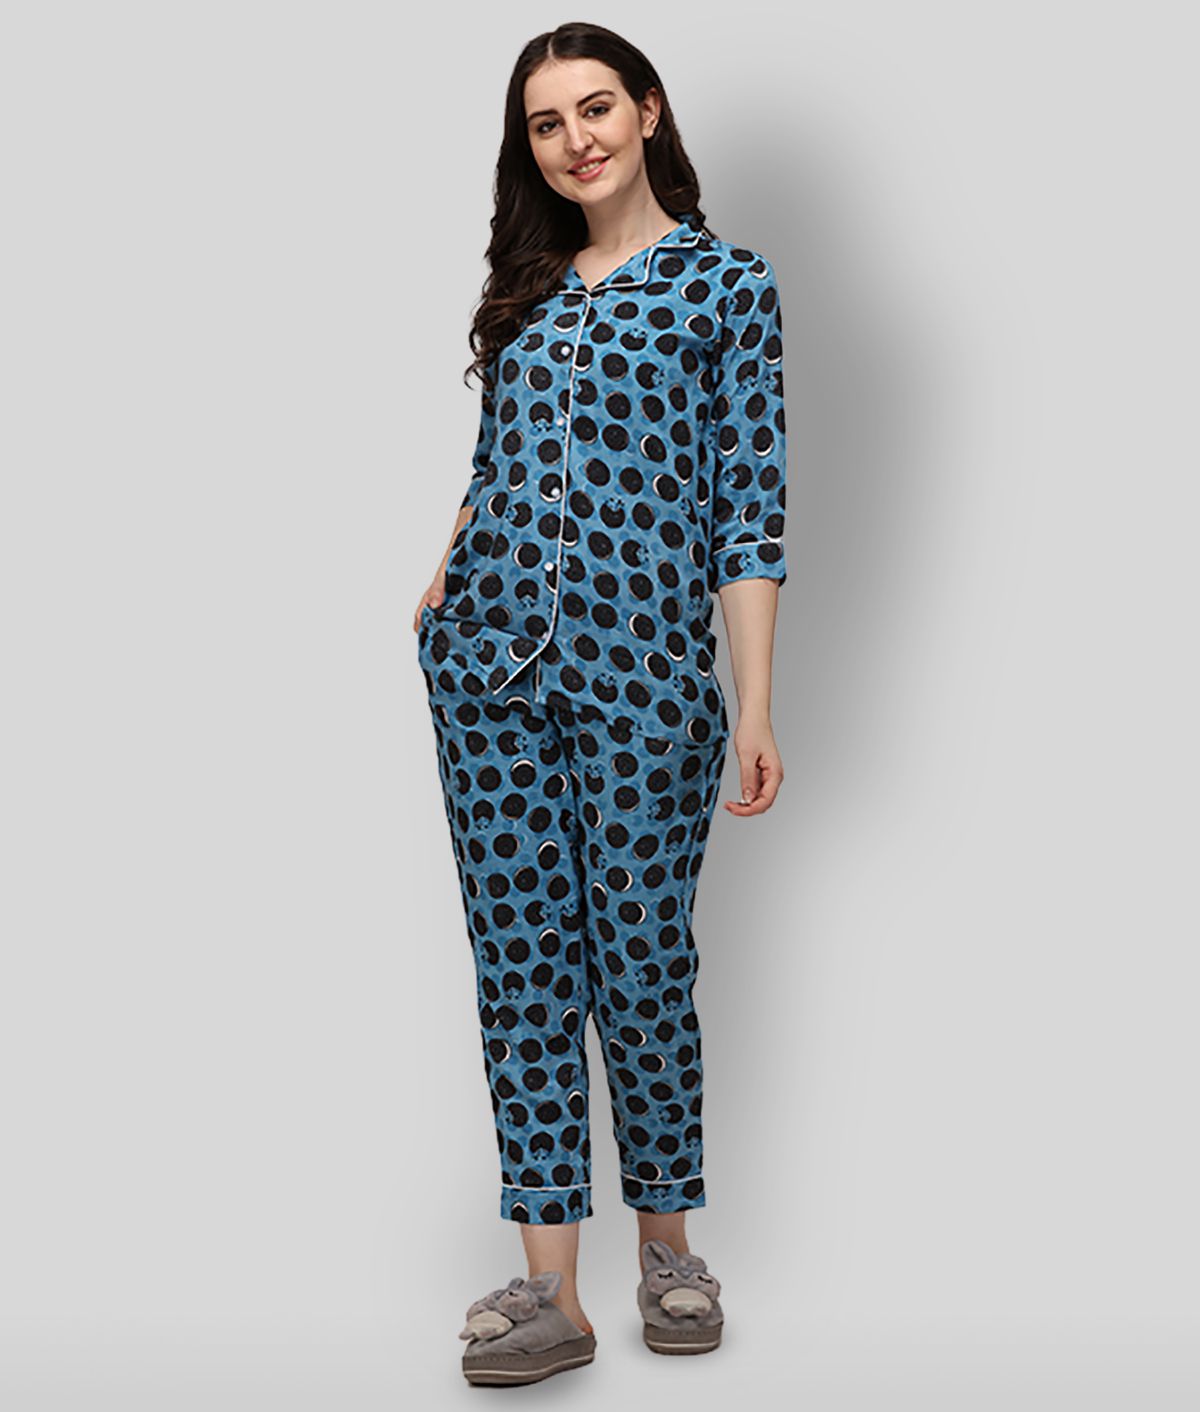     			Berrylicious - Blue Rayon Women's Nightwear Nightsuit Sets